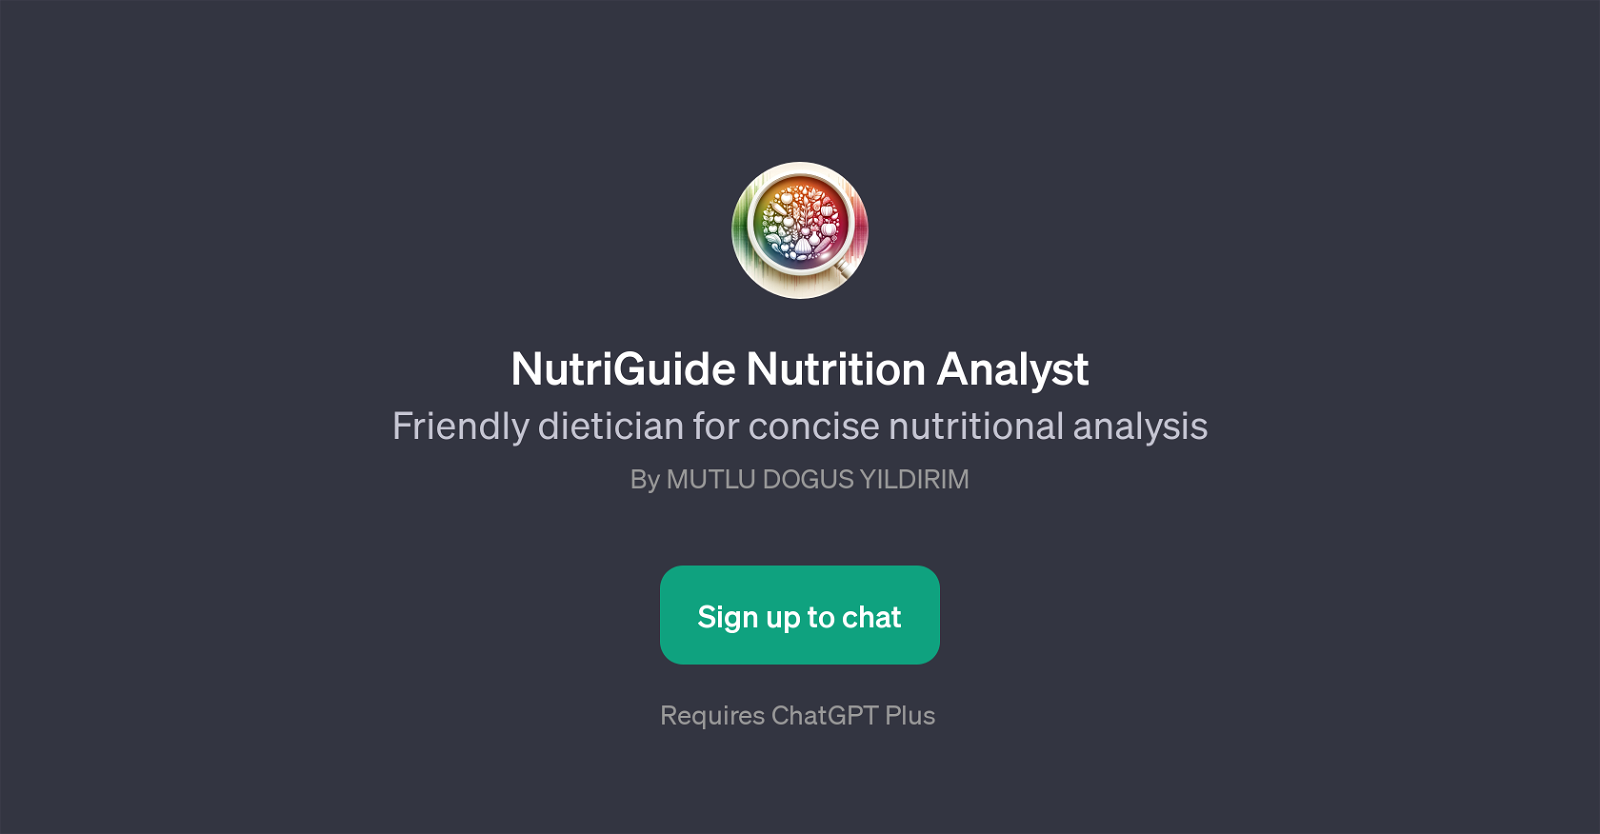 NutriGuide Nutrition Analyst website